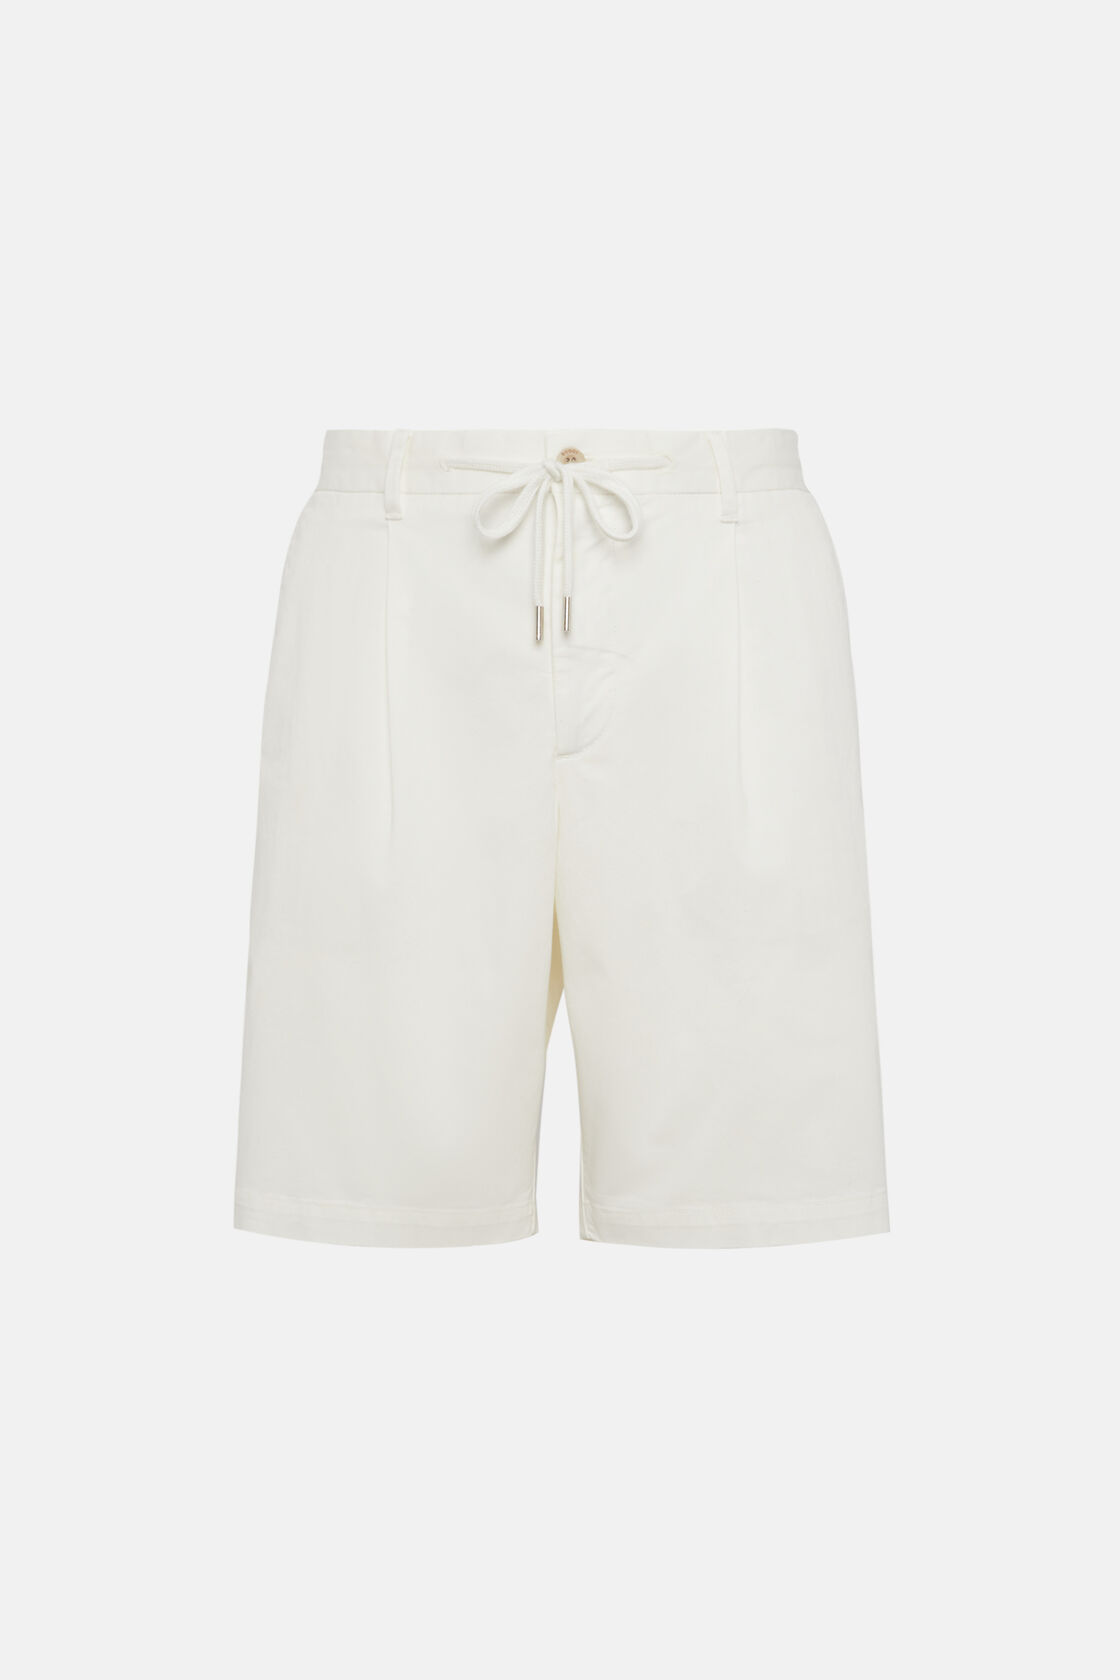 Stretch Cotton Summer Bermuda Shorts, Cream, hi-res